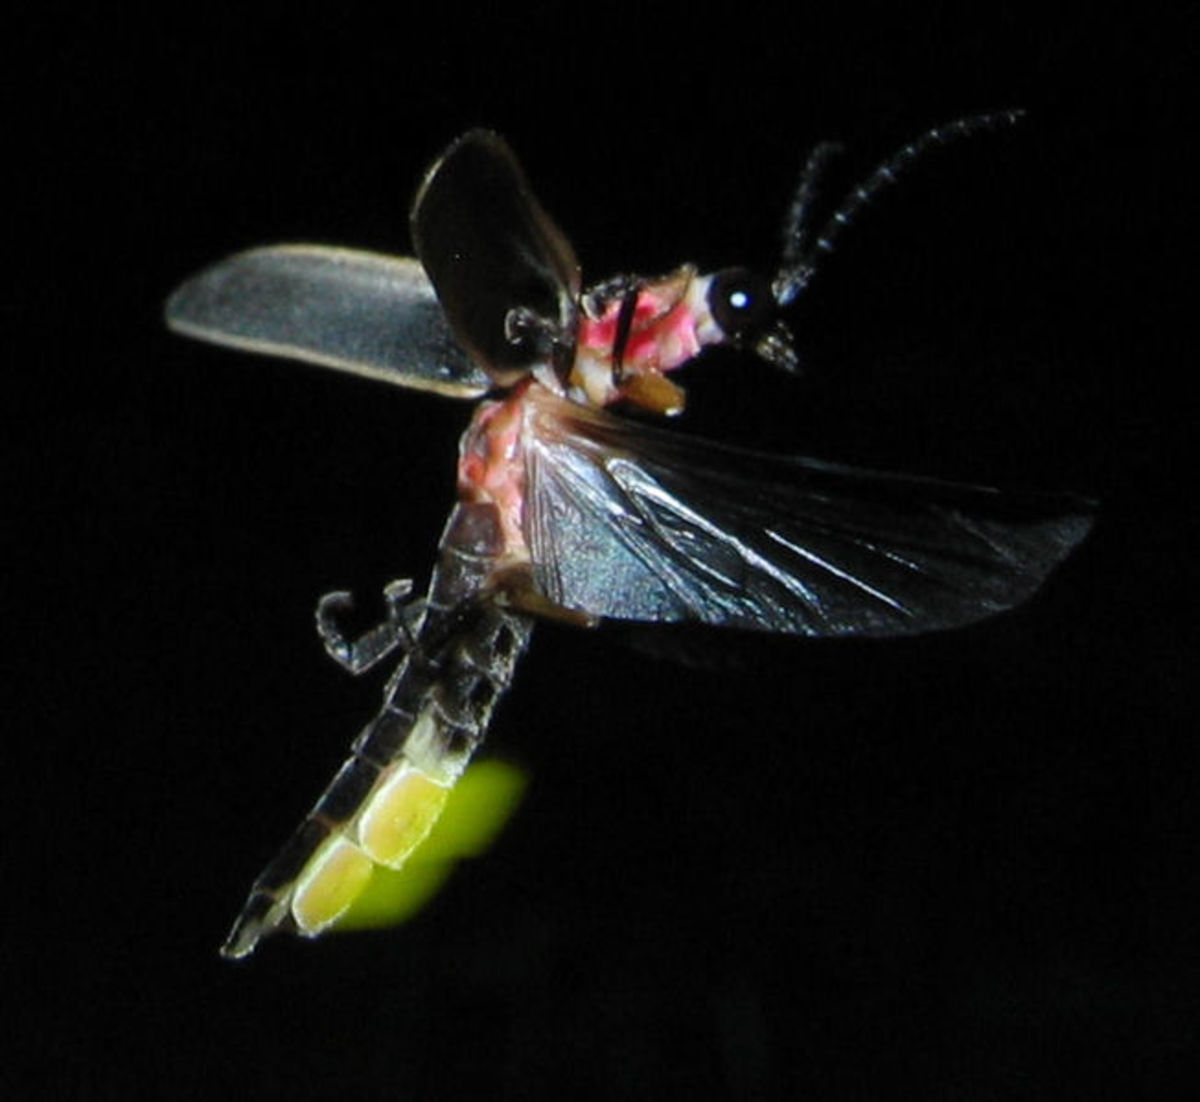 Firefly (photinus pyralis) glowing